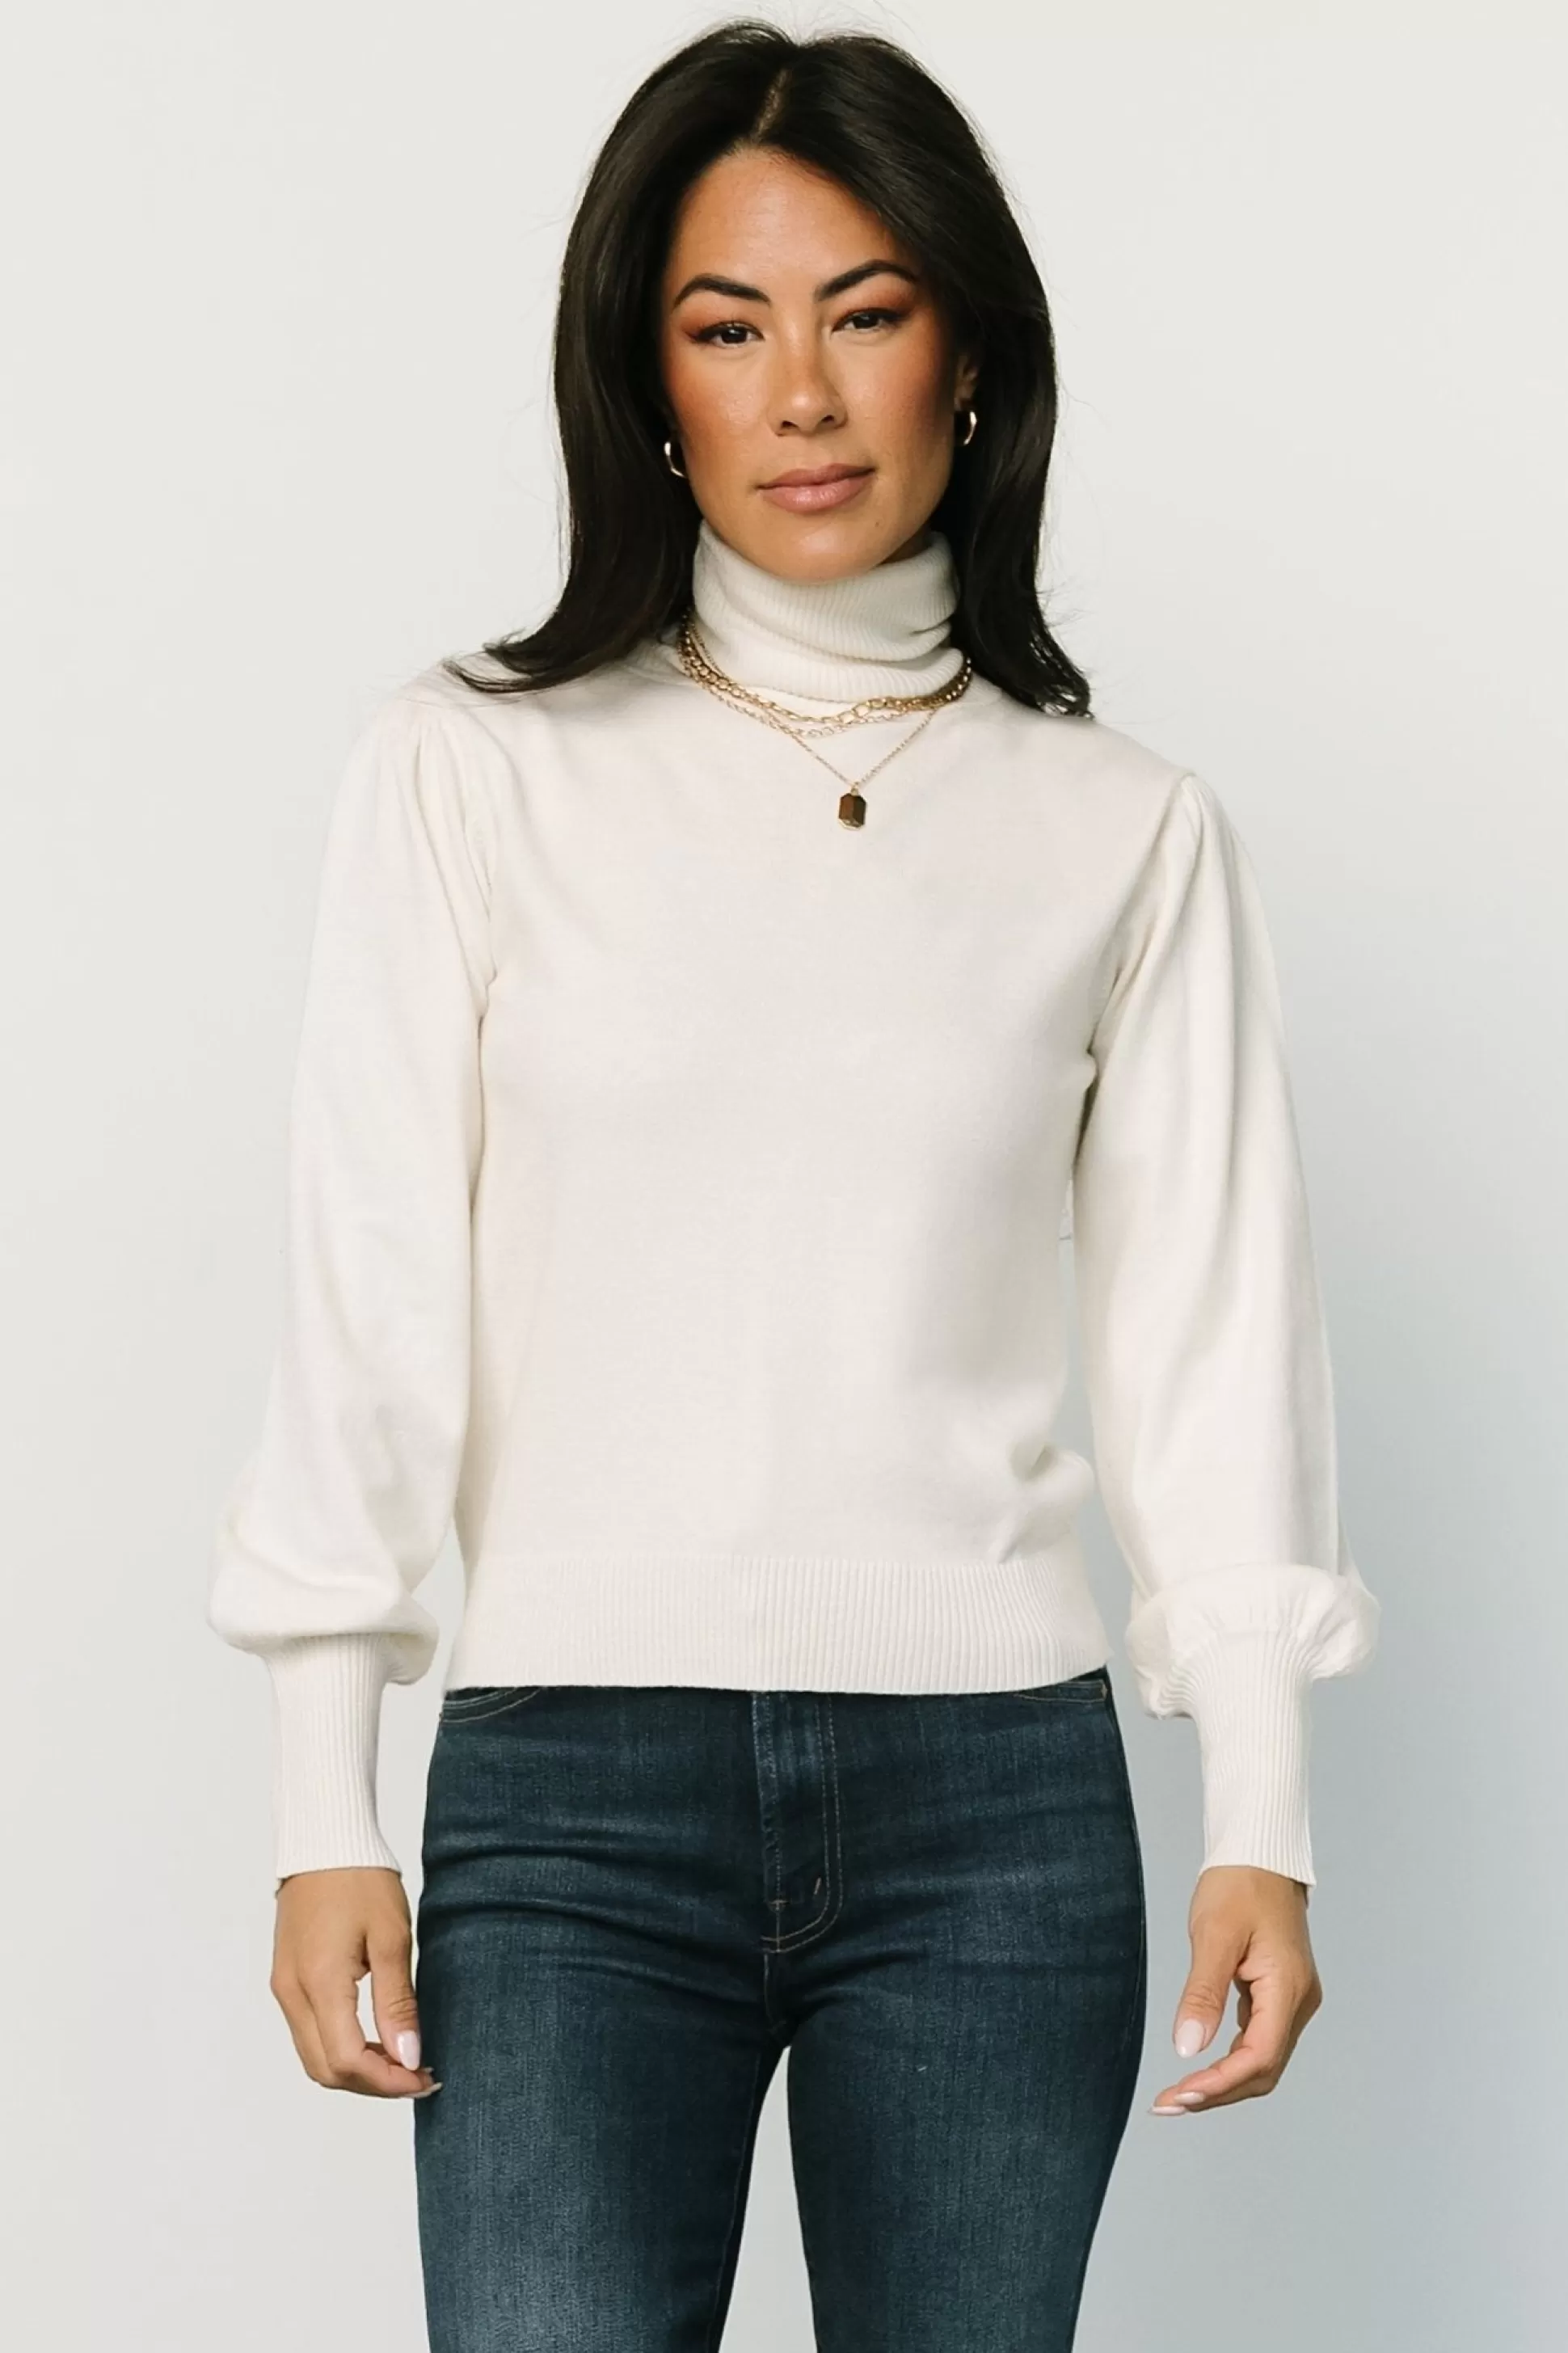 blouses + shirts | WINTER ESSENTIALS | Baltic Born Danica Turtleneck Knit Top | Ivory